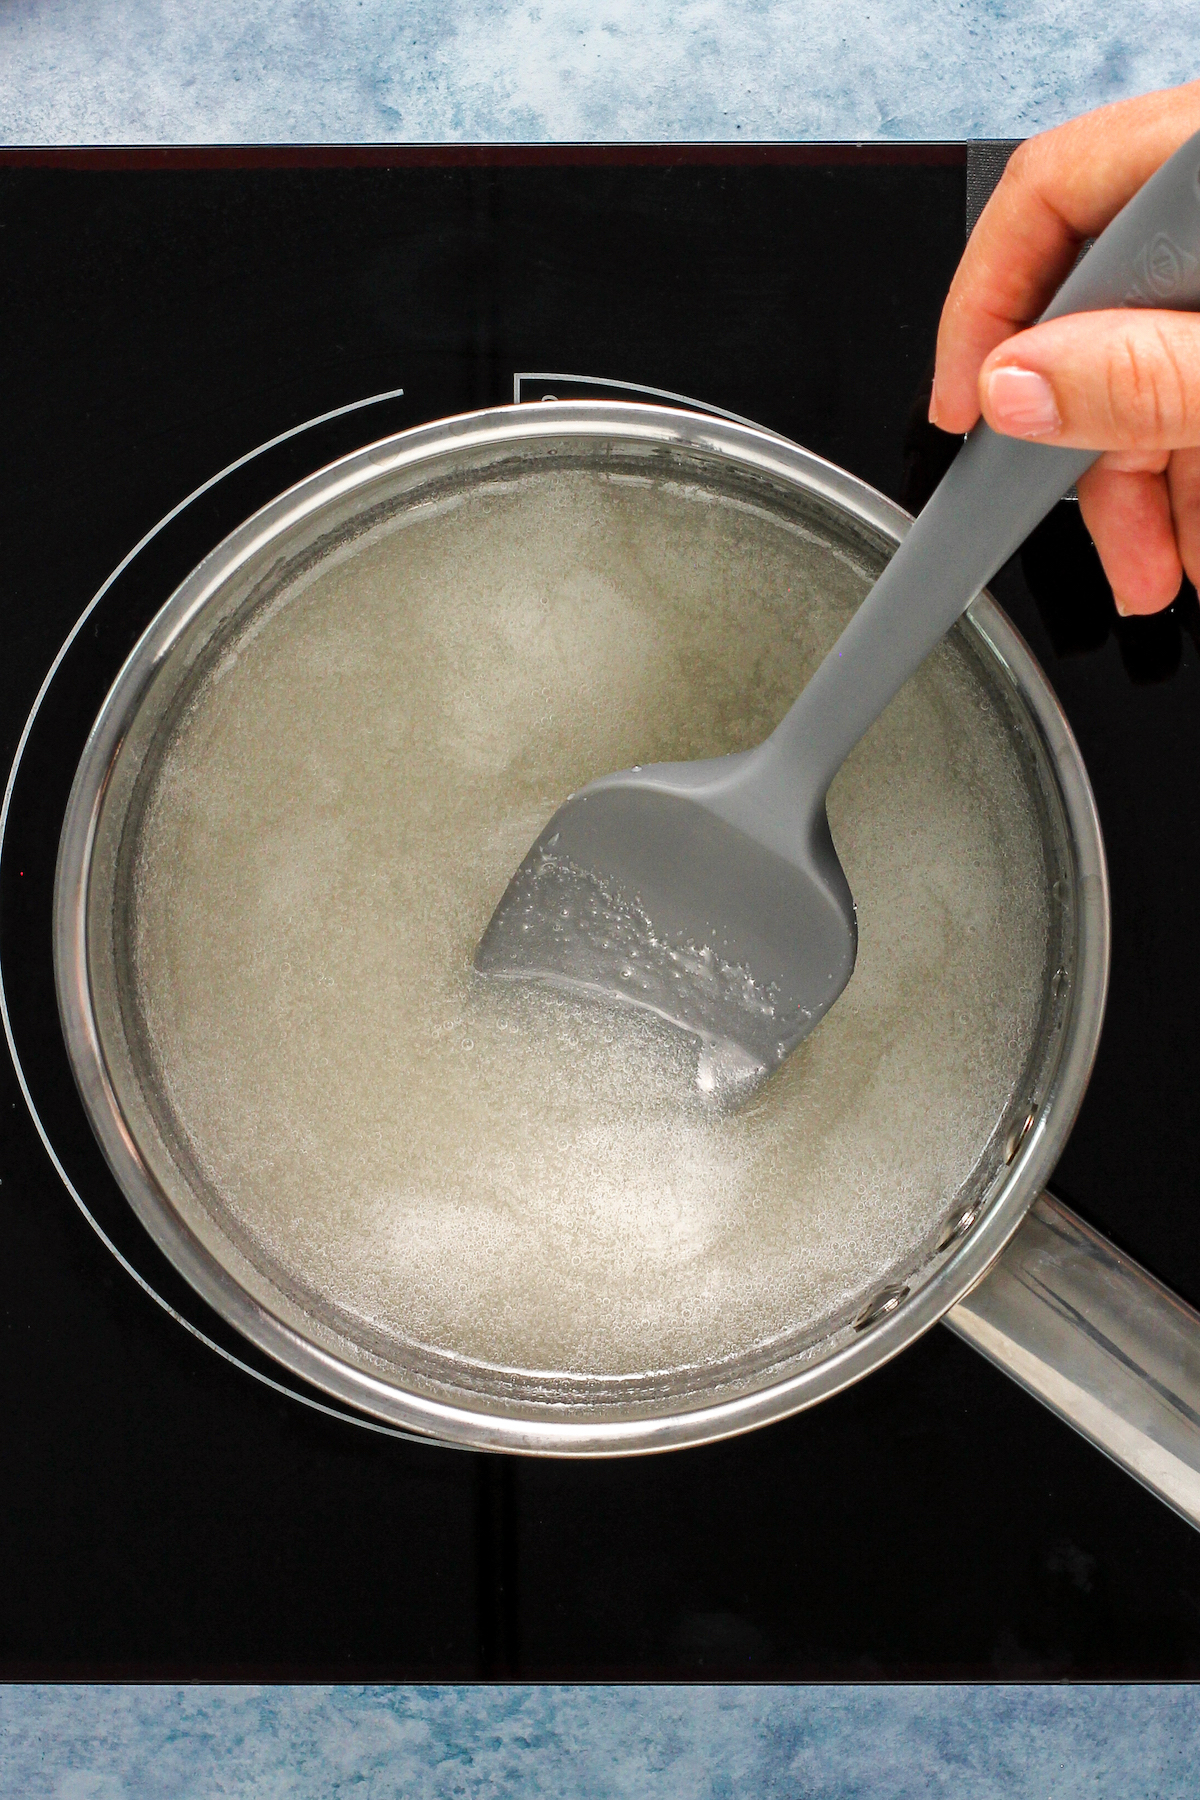 Sugar mixture cooking in a sauce pan.